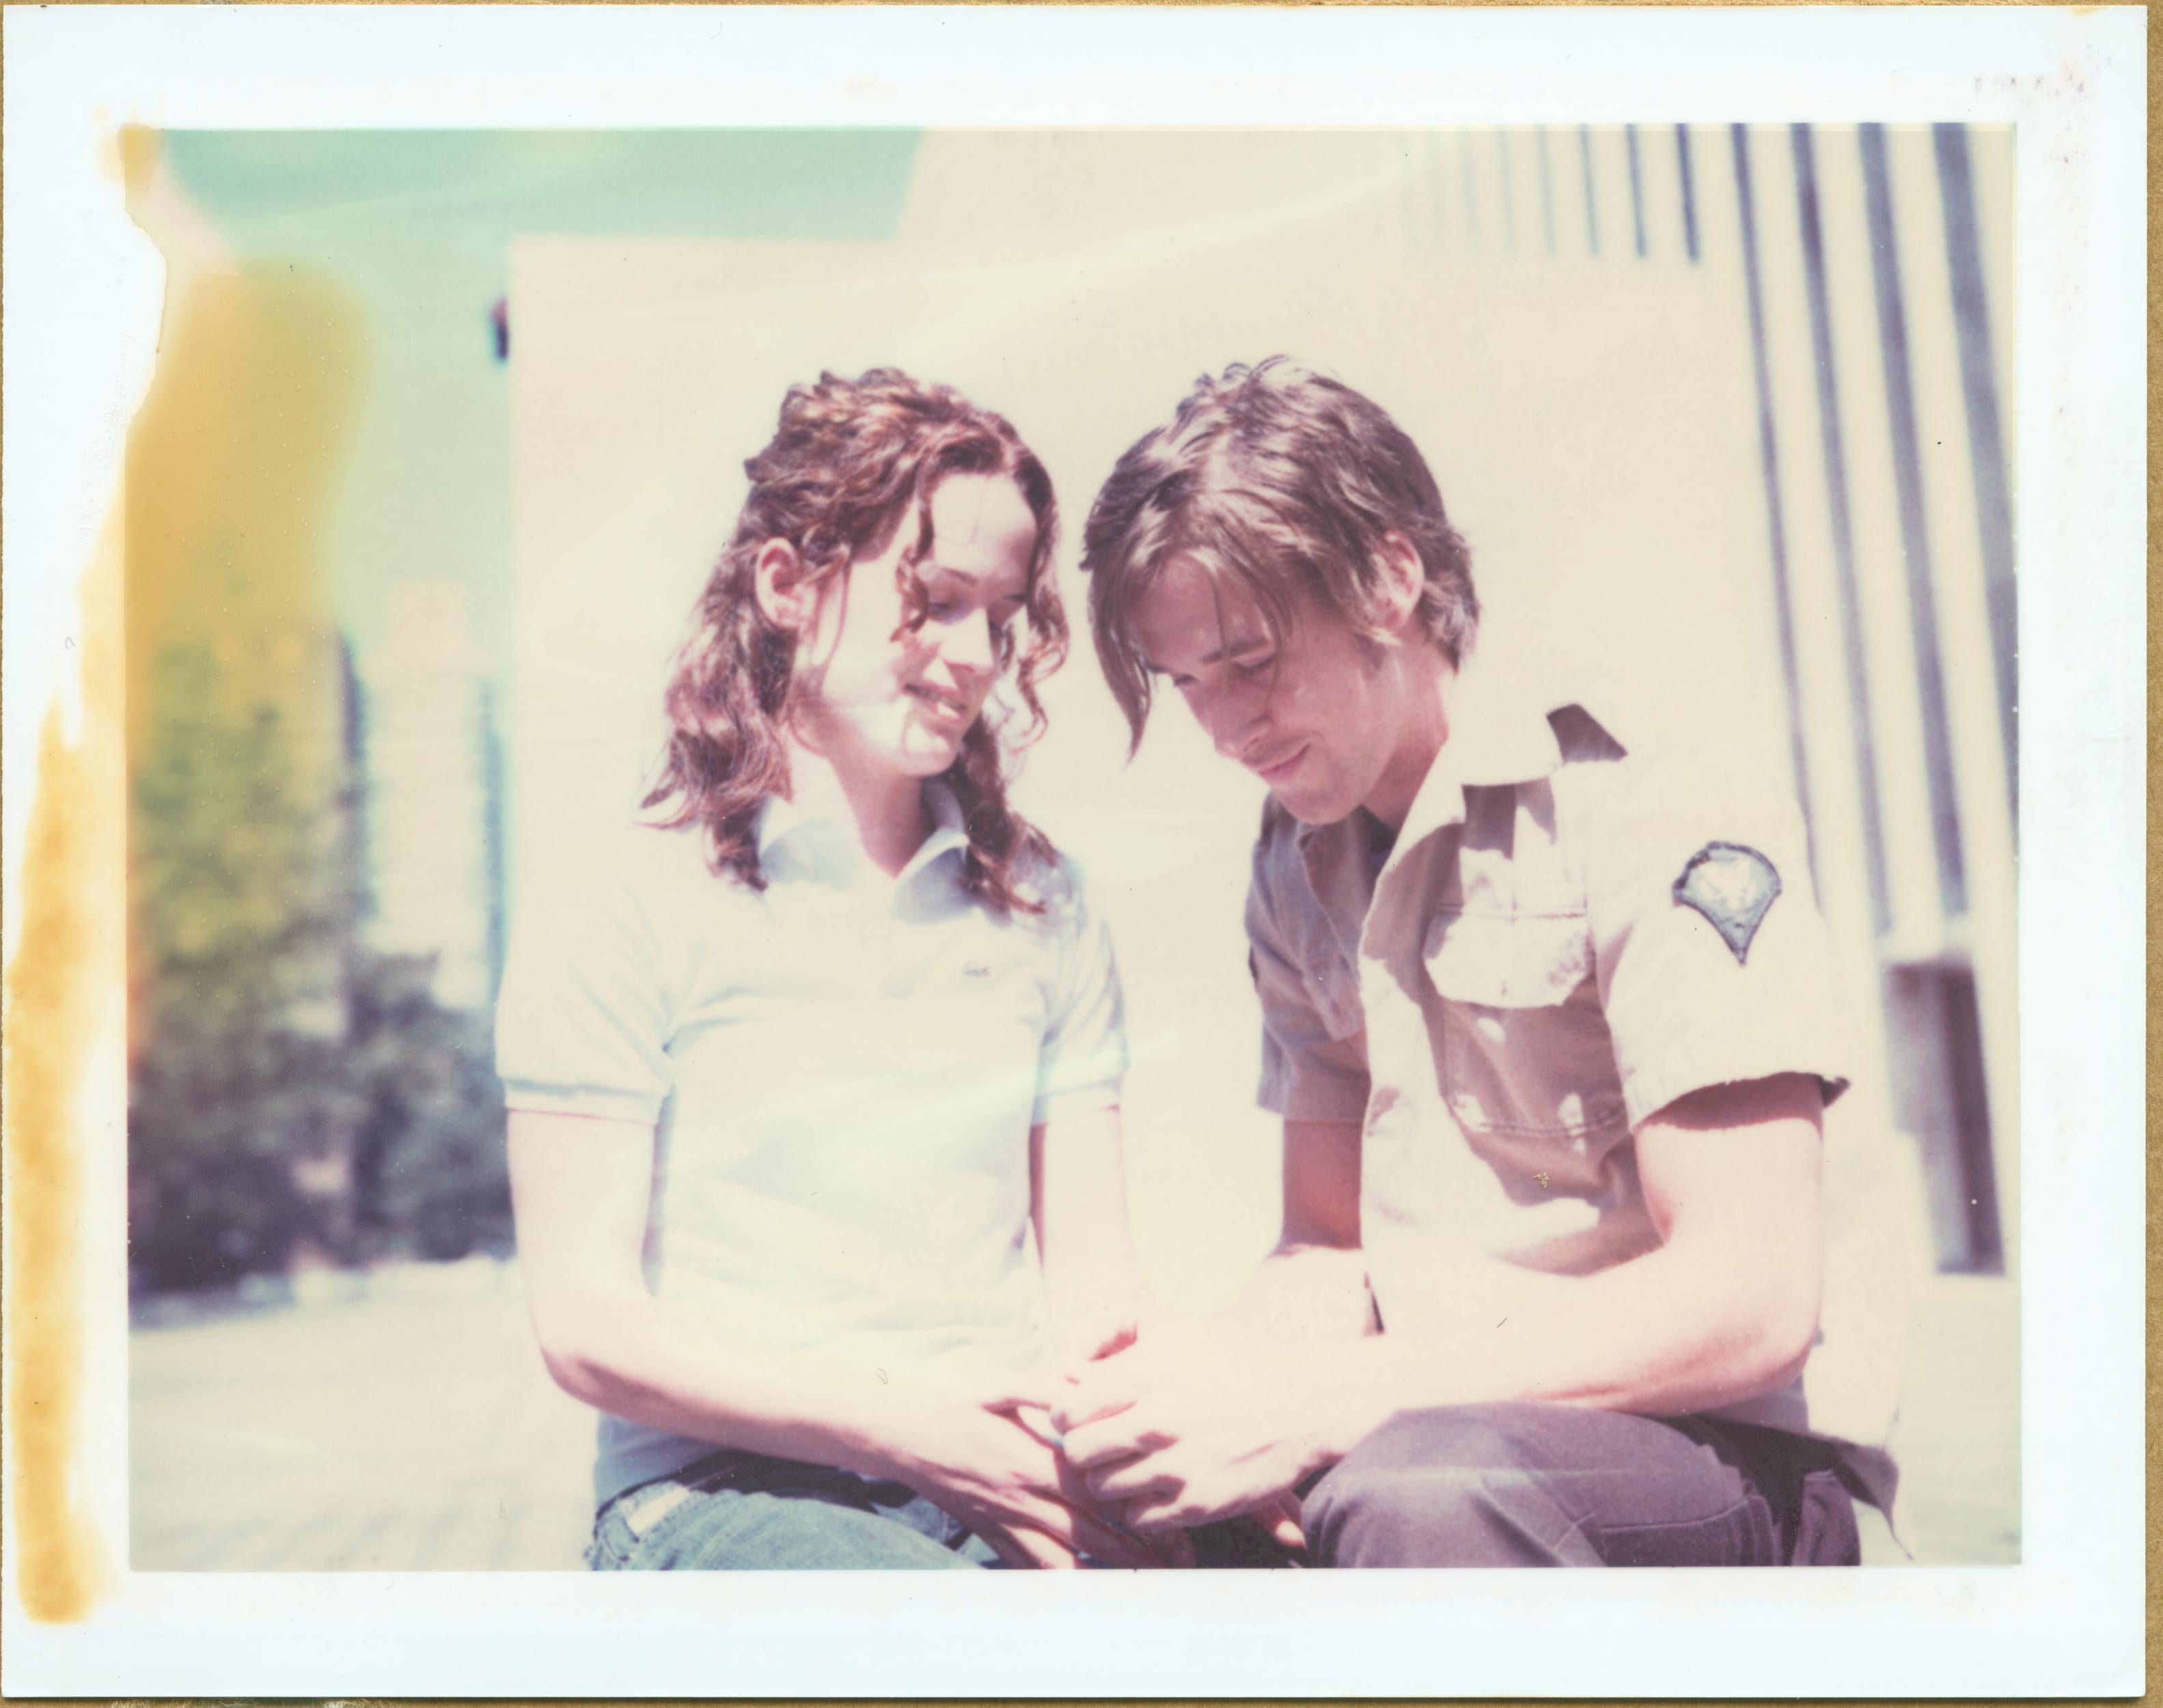 Athena und Henry (Stay) – Ryan Gosling und Elizabeth Reaser – Polaroid